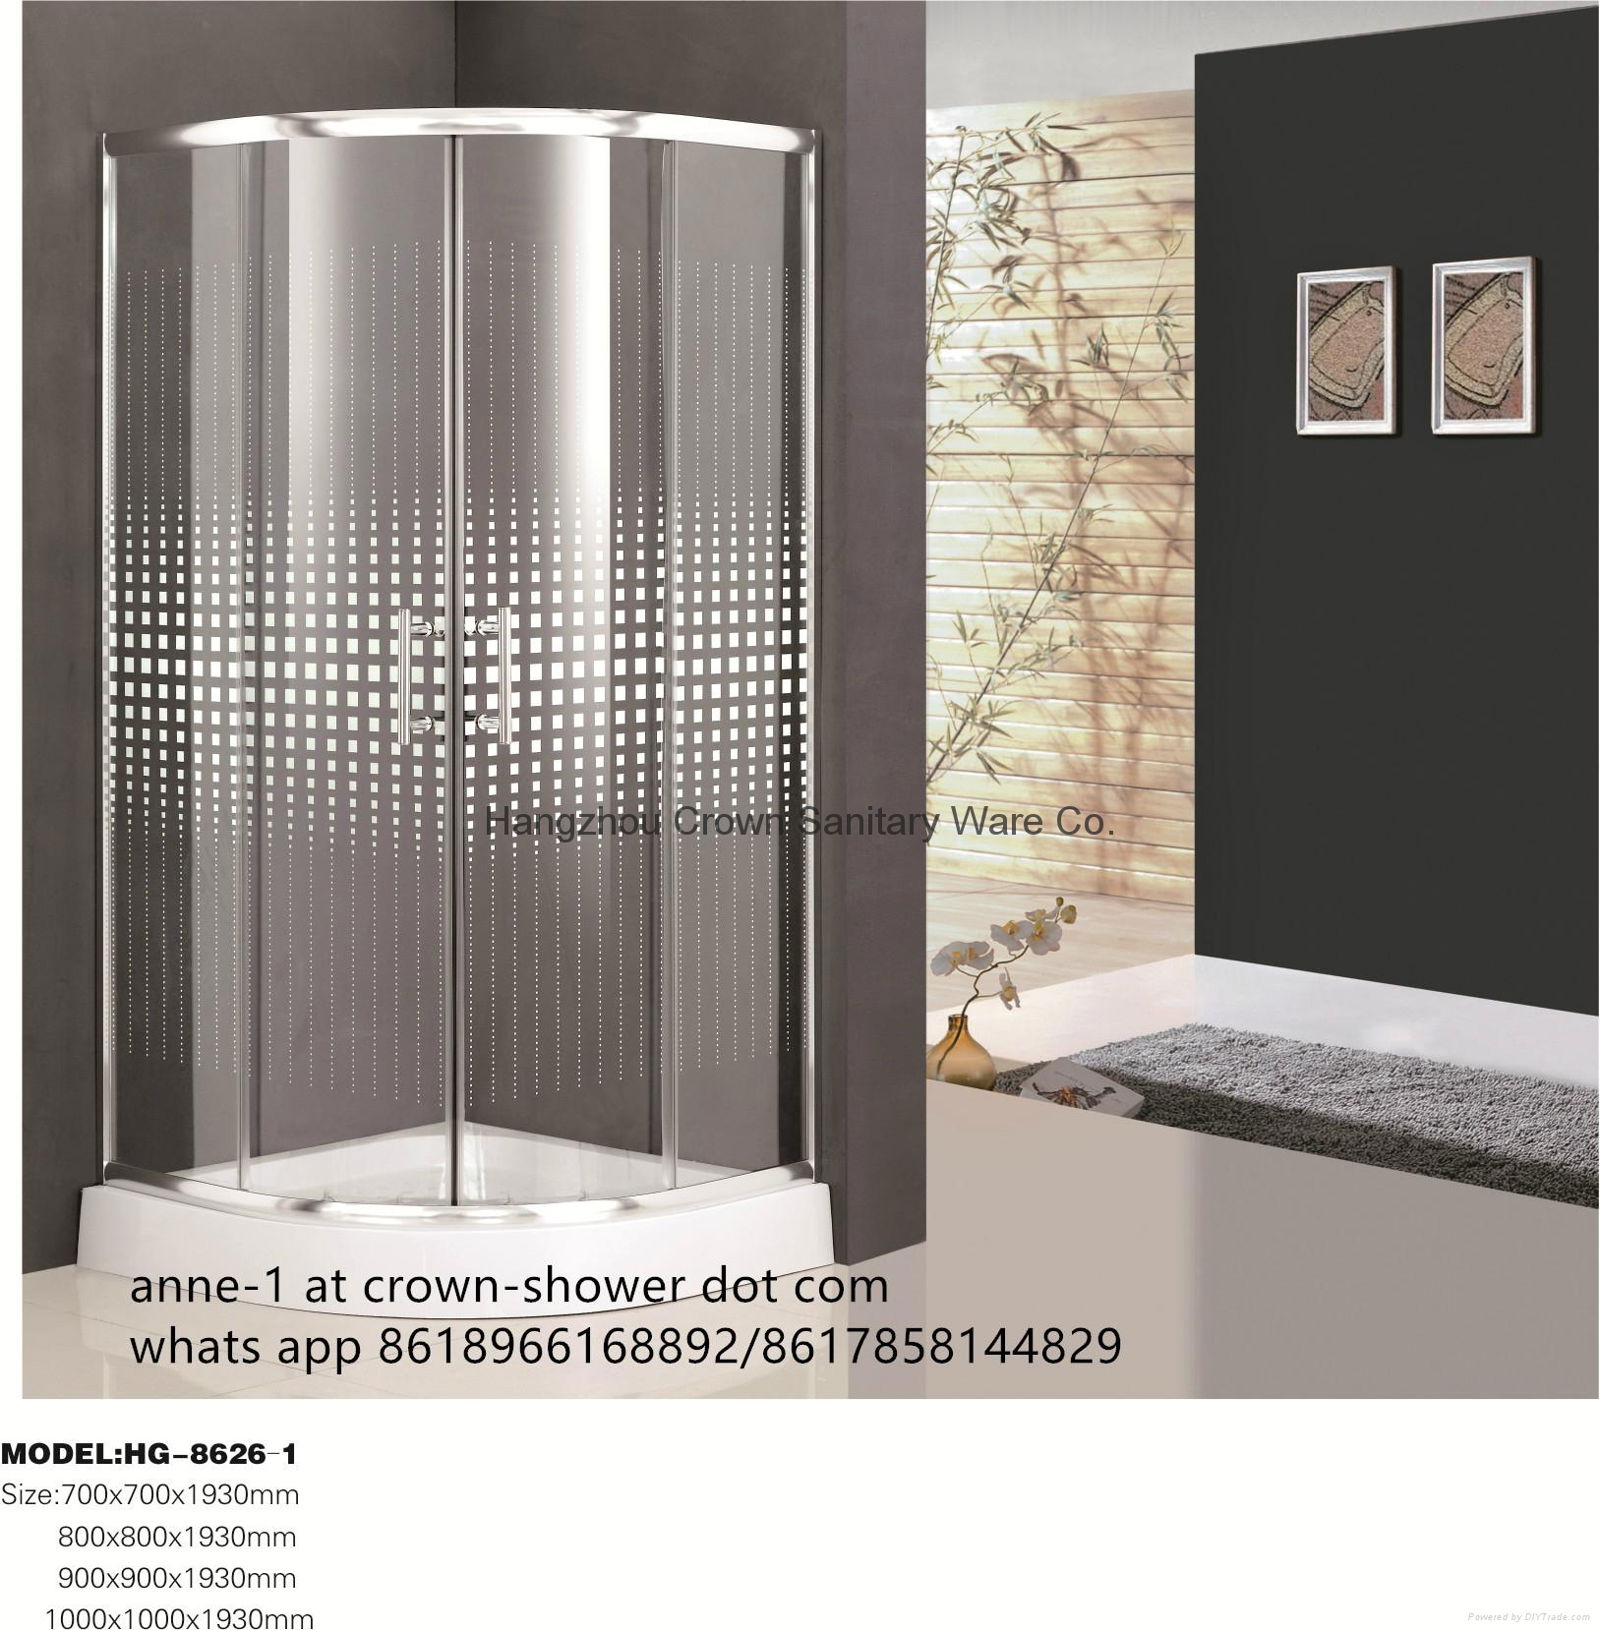 Crown corner bathroom portable shower enclosures easy to clean shower stalls 5